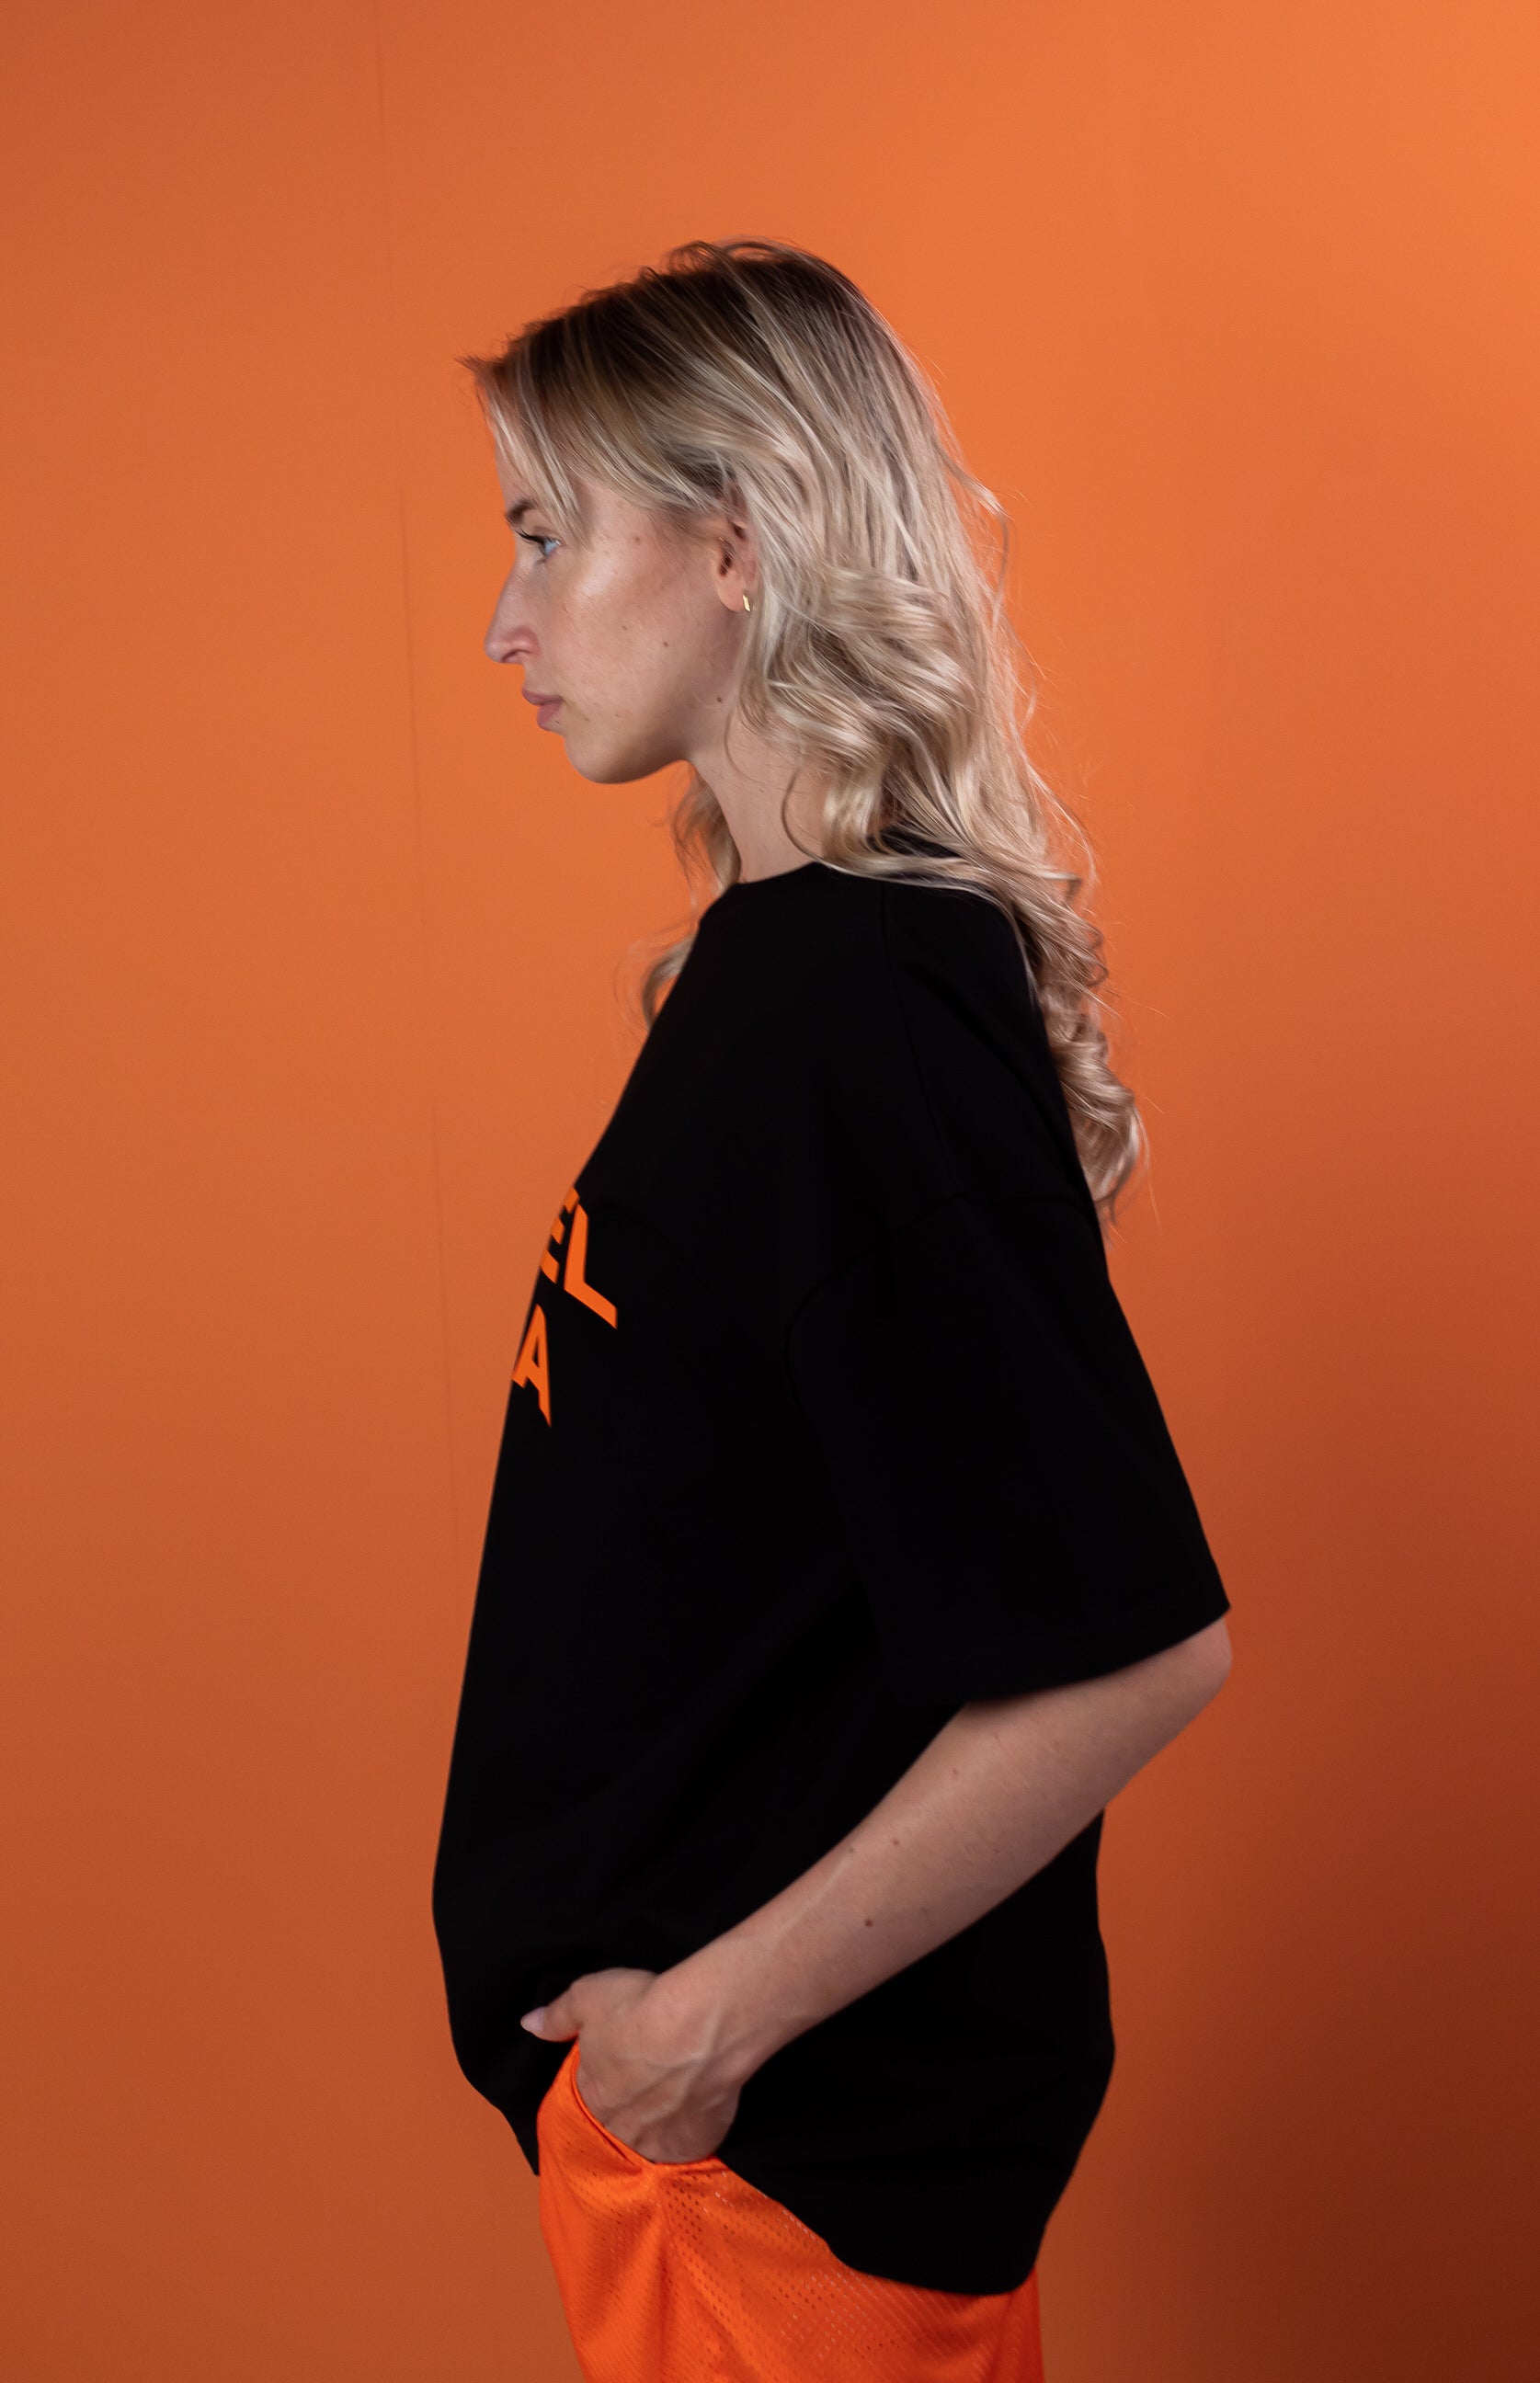 model wearing black oversie tshirt with orange wavy brand name design